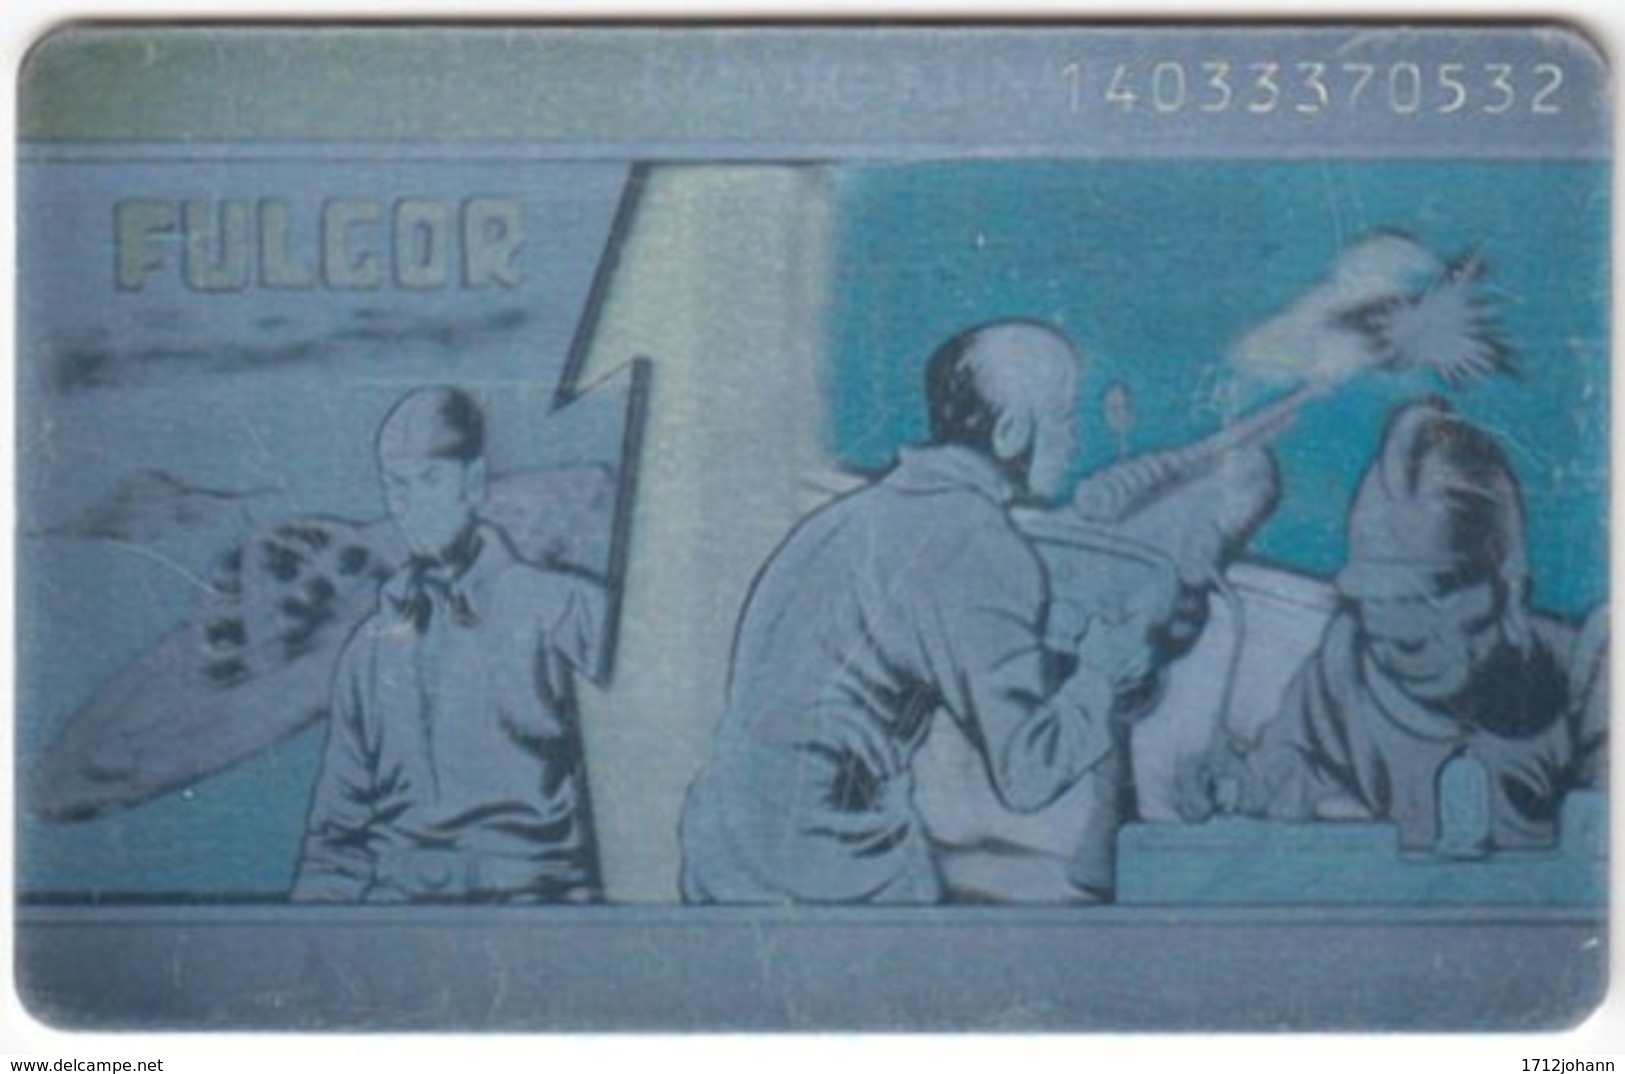 GERMANY S-Serie B-259 - Hologram, Comics, Fulcor (1403) - Used - S-Series: Schalterserie Mit Fremdfirmenreklame